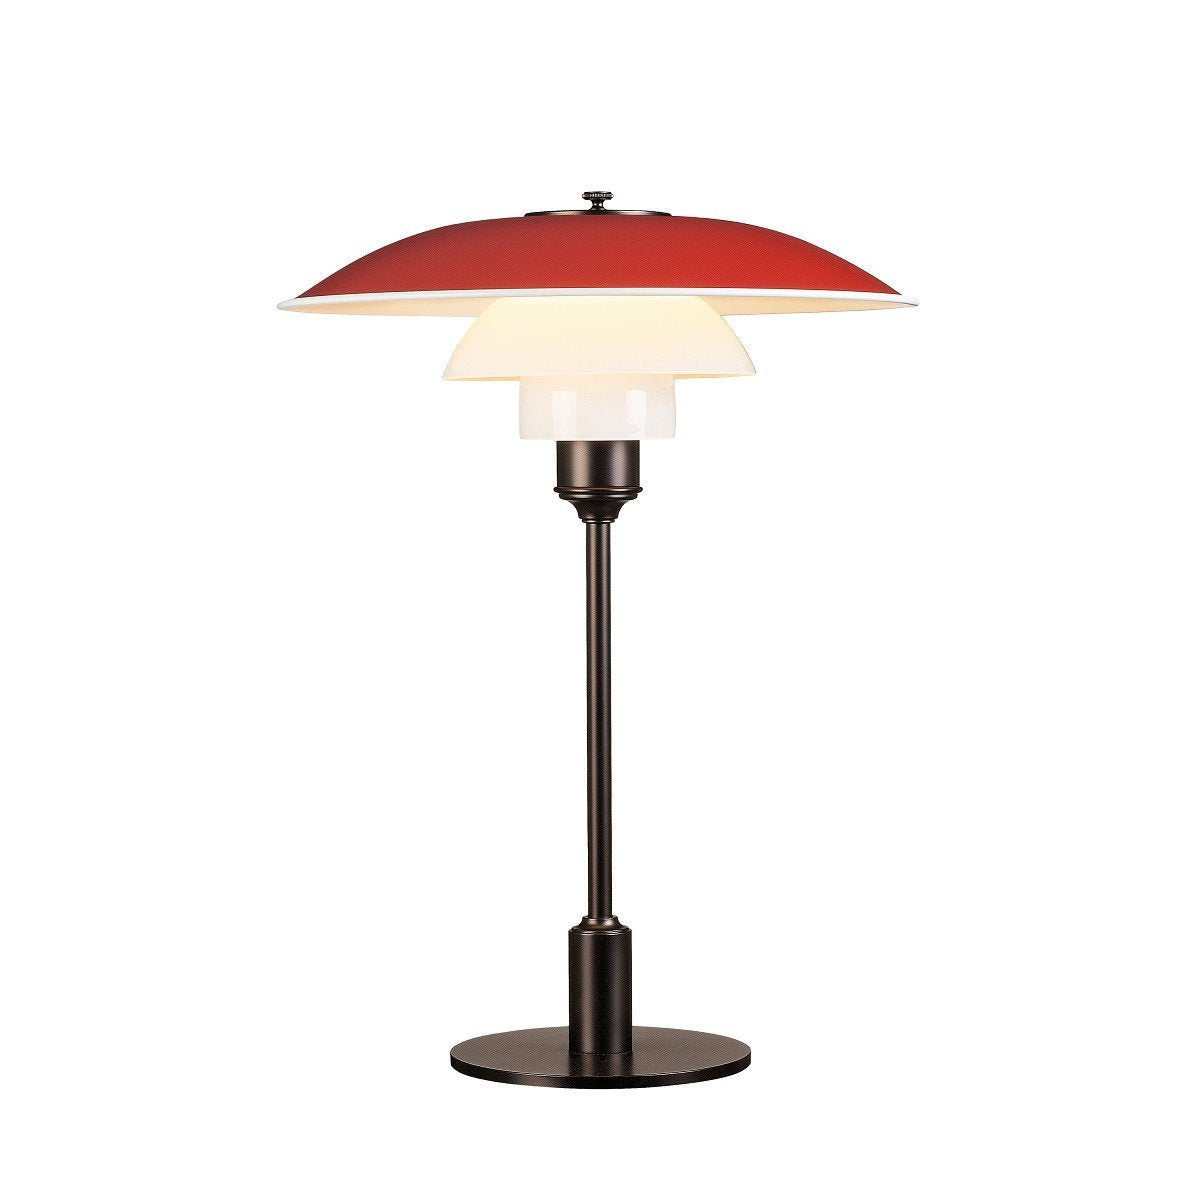 Louis Poulsen Ph 3 1/2 2 1/2 Table Lamp, Red